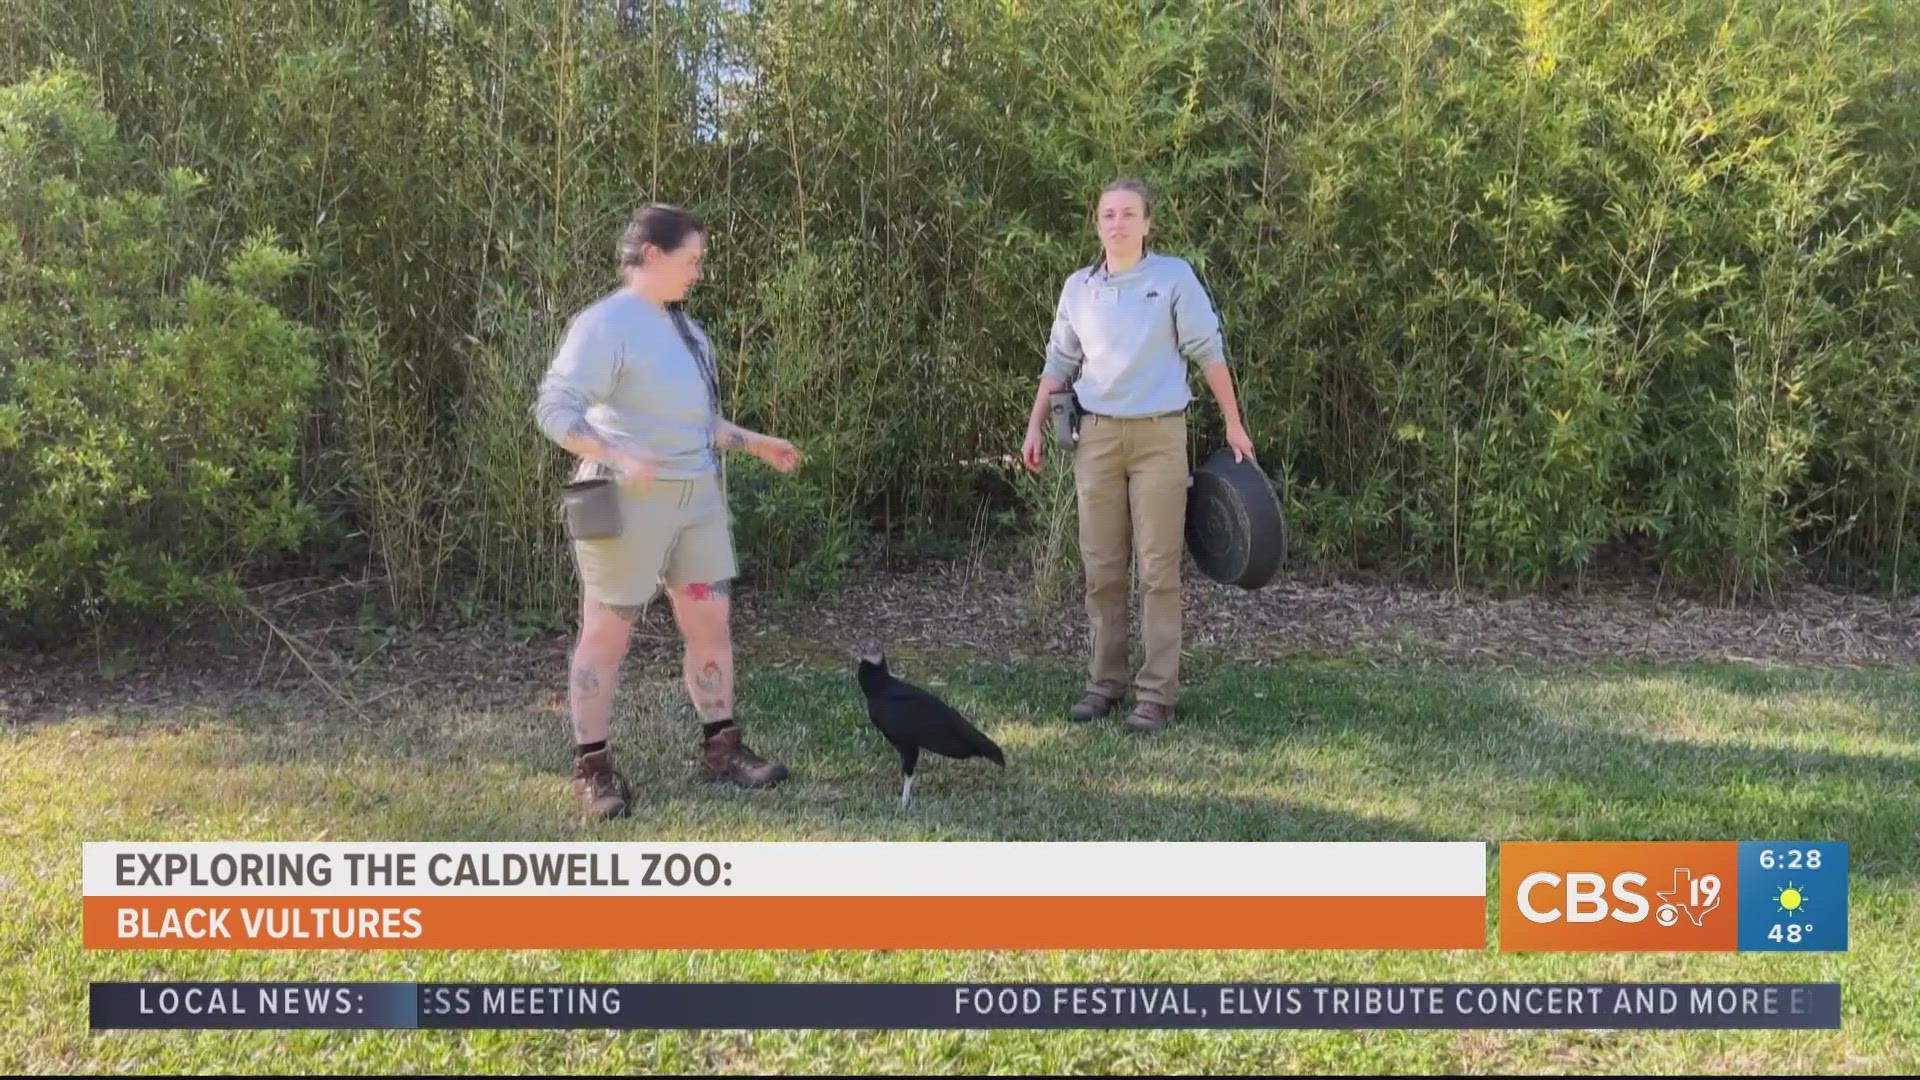 EXPLORING THE CALDWELL ZOO: Meet Matilda the black vulture